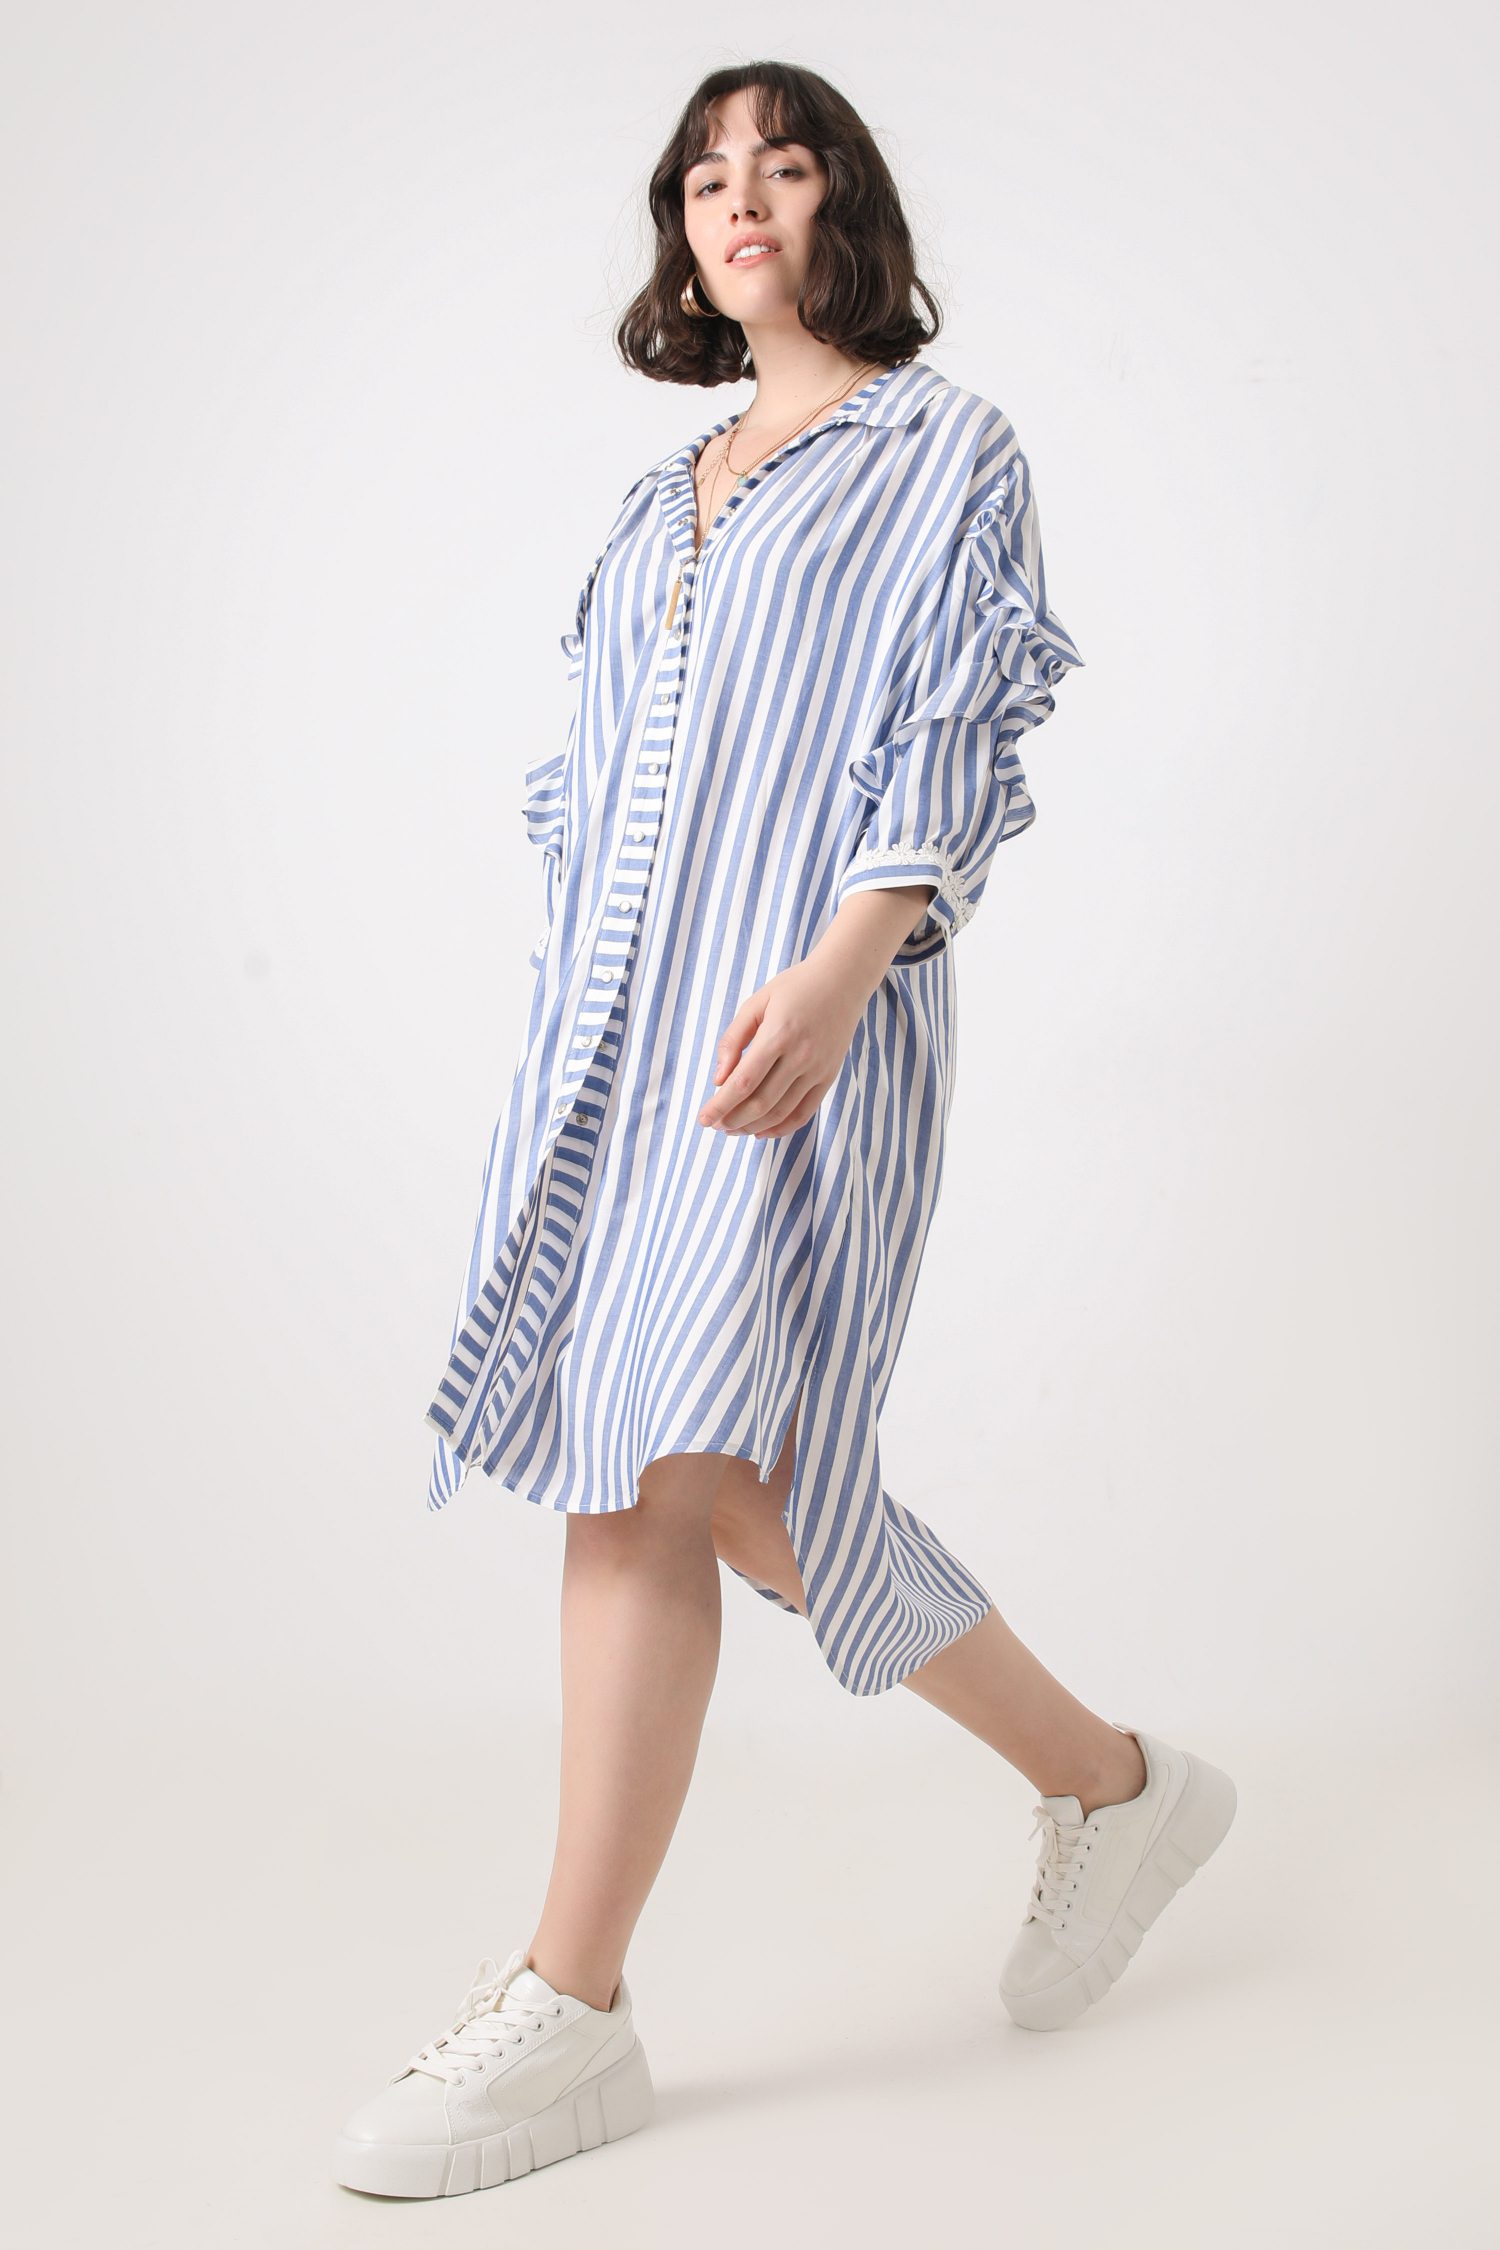 Long striped shirt dress (shipping February 25/28)